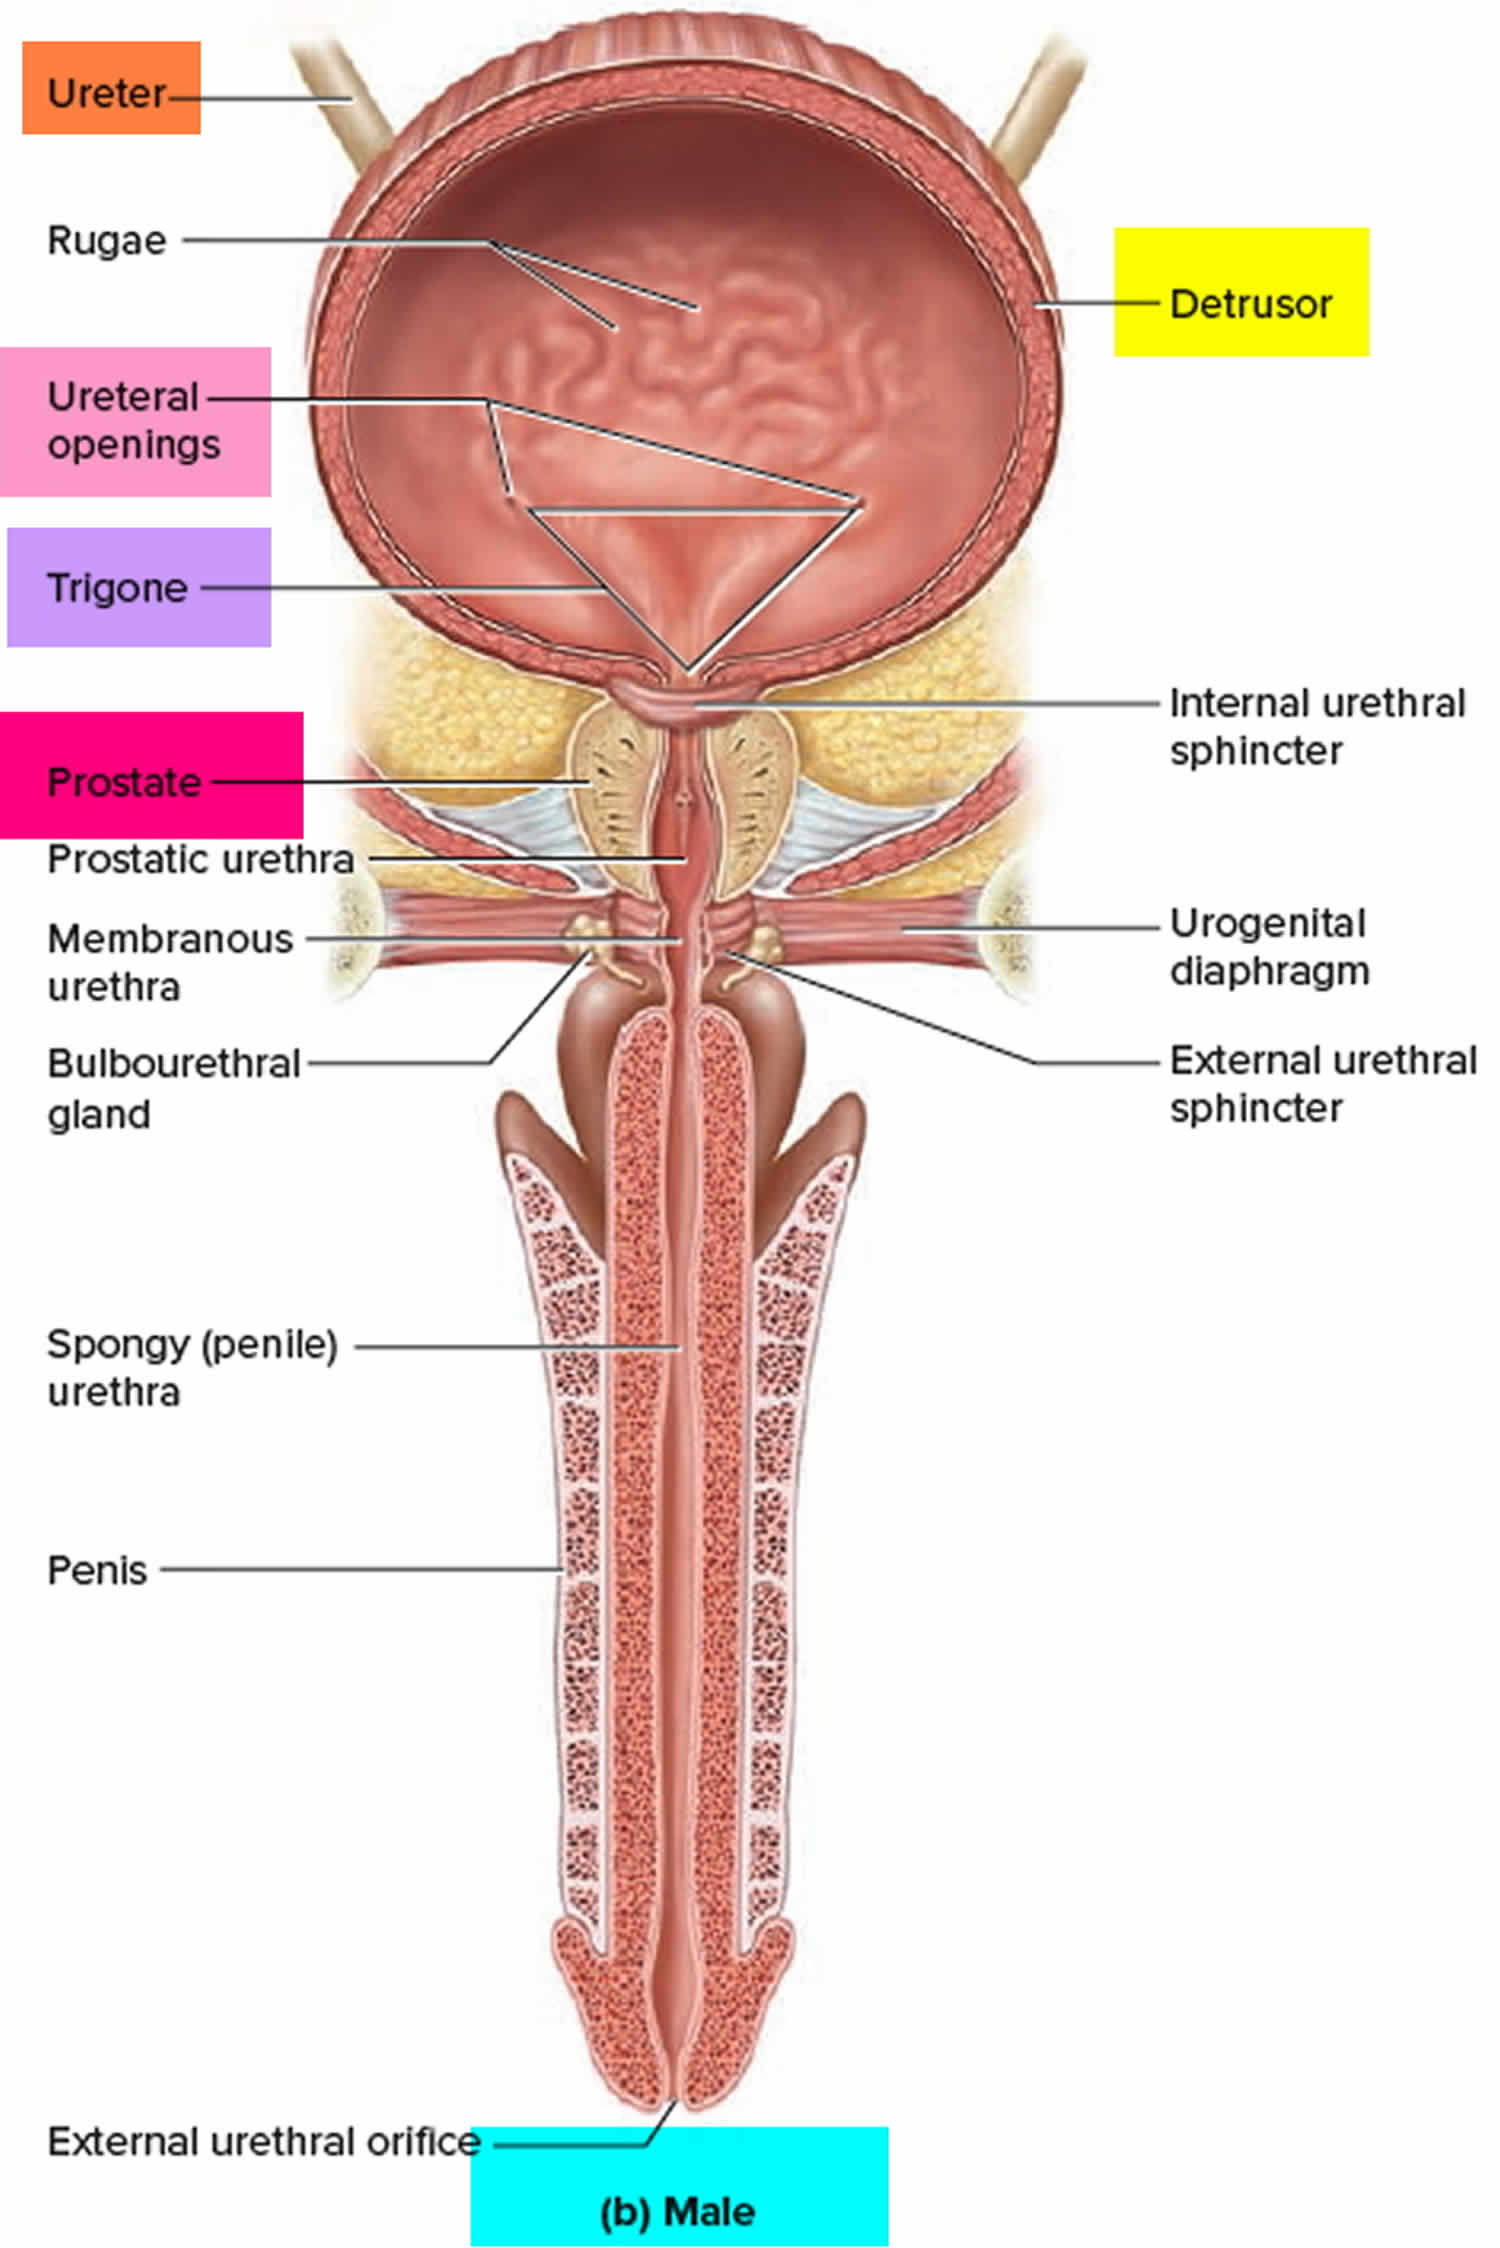 Retrograde ejaculation definition, causes, symptoms, diagnosis & treatment